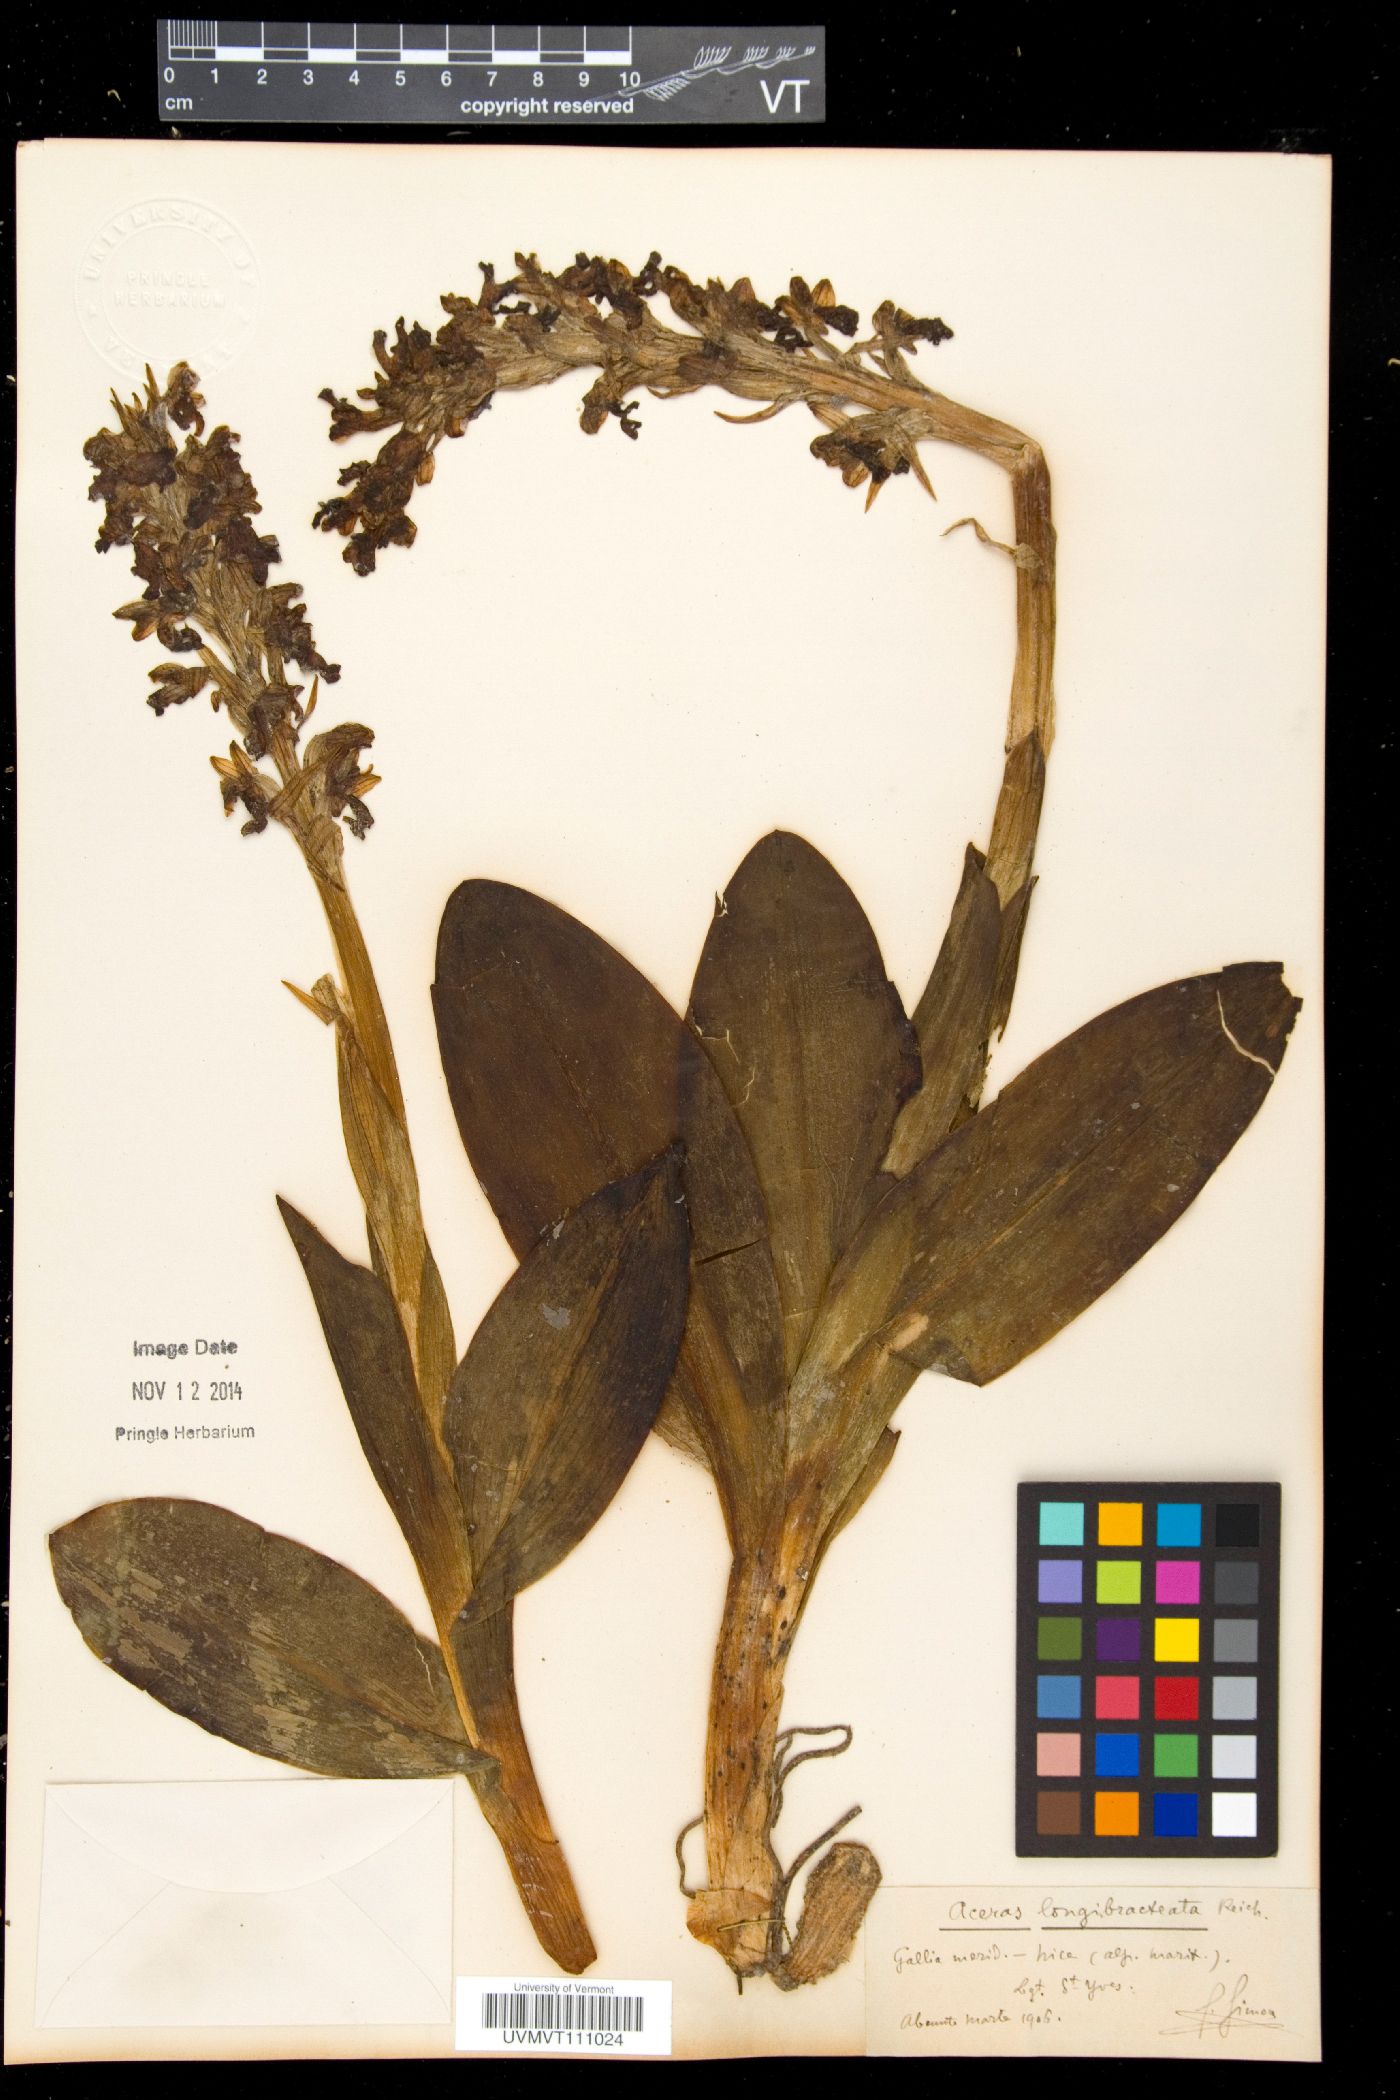 Himantoglossum robertianum image